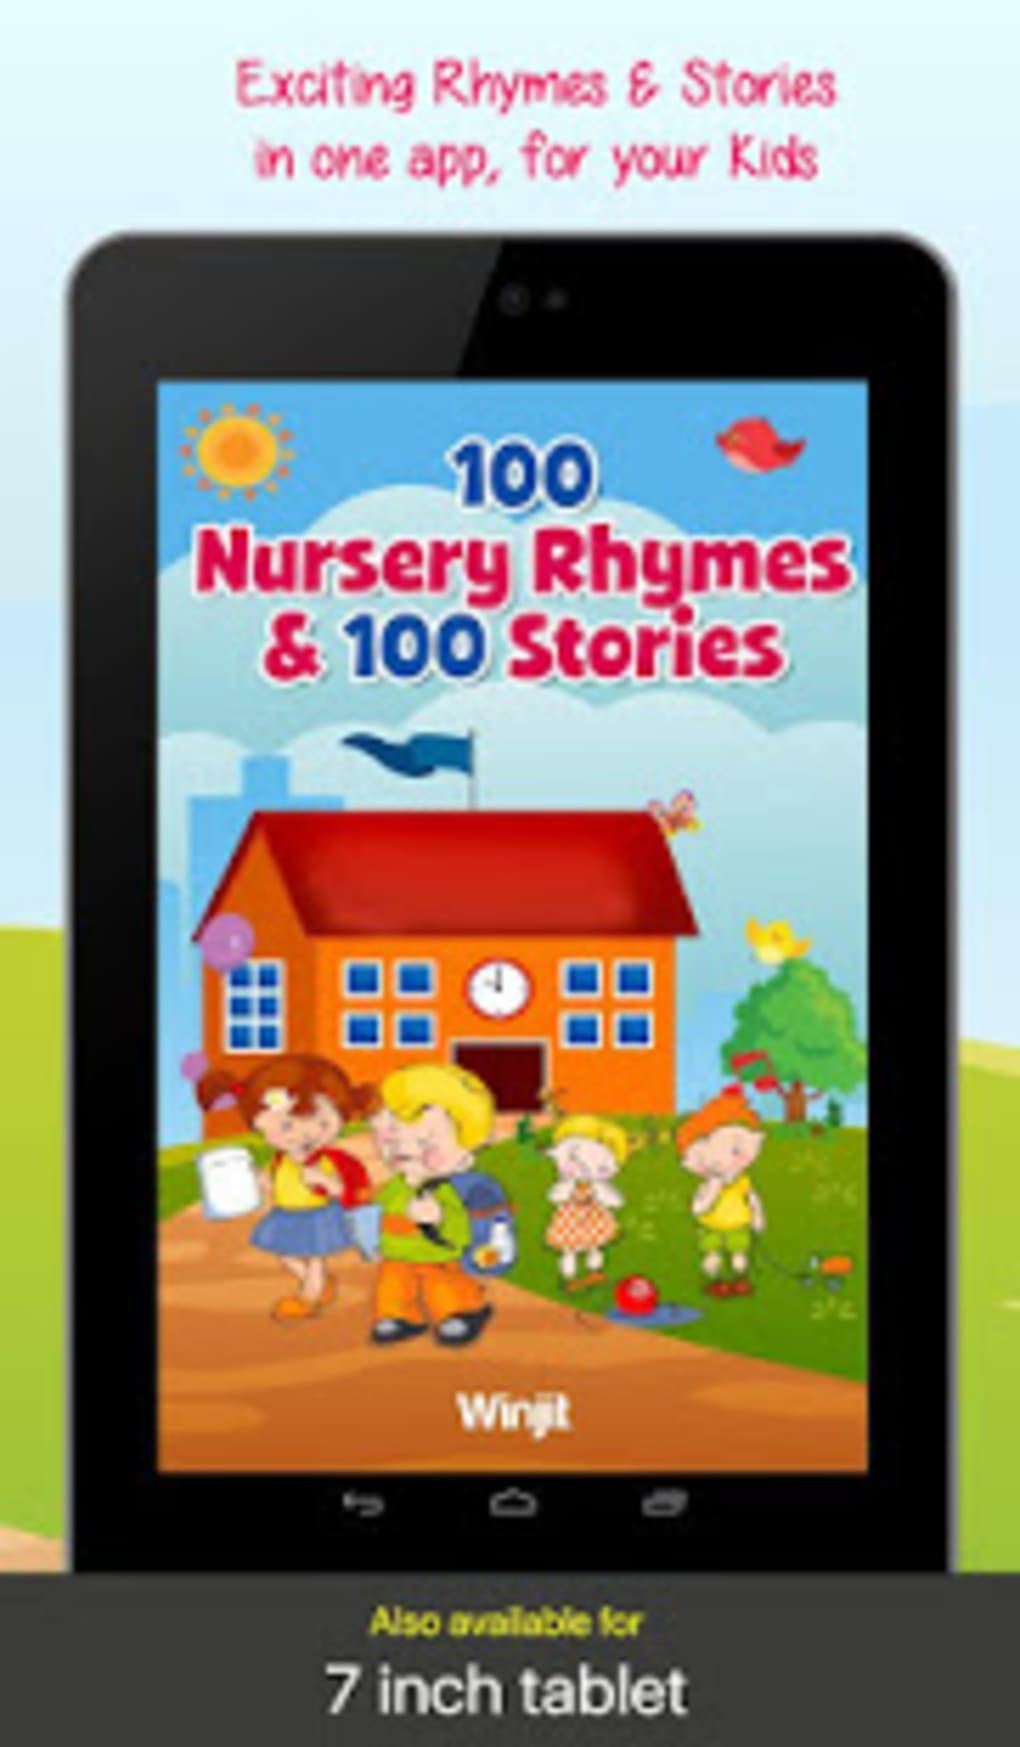 20 Kids Nursery Rhymes 20 Children Stories APK for Android ... Hol dir